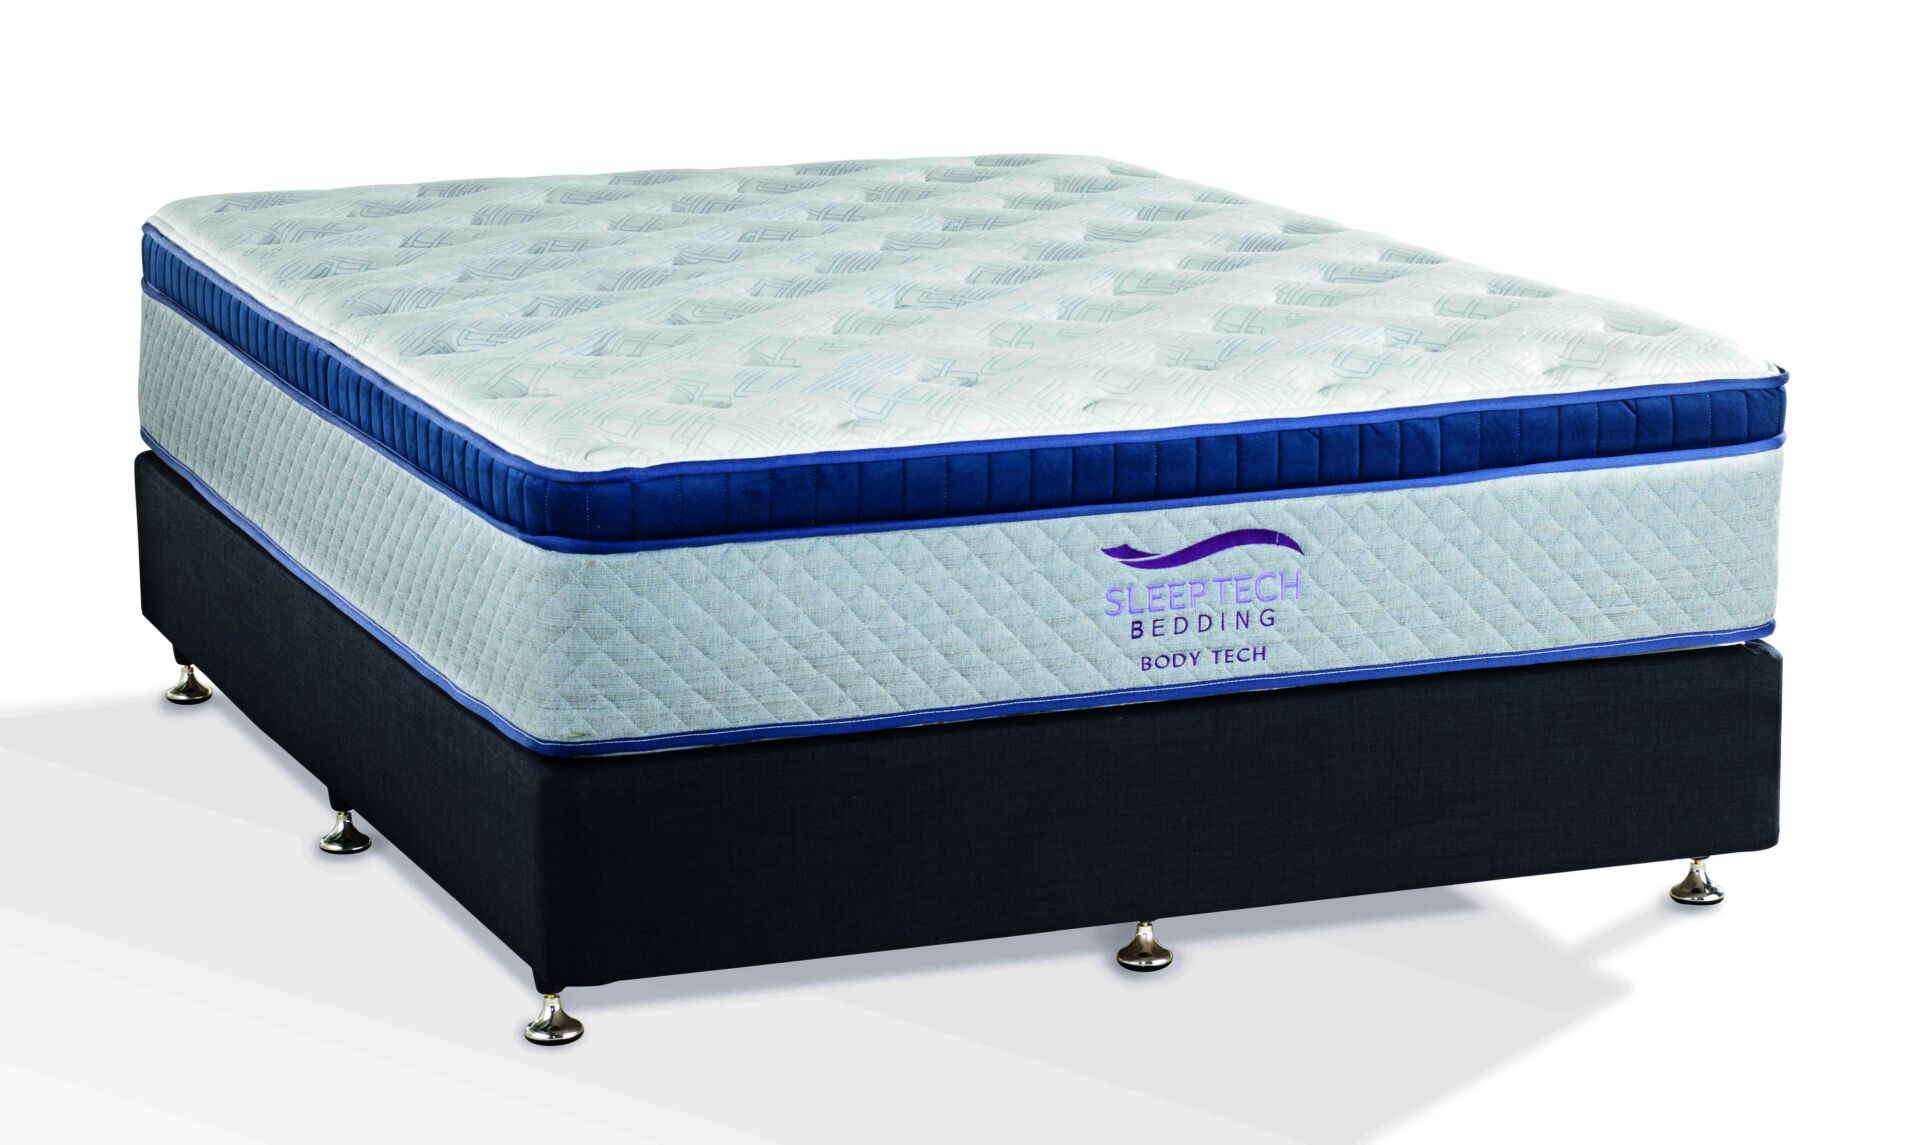 body tech dover mattress reviews